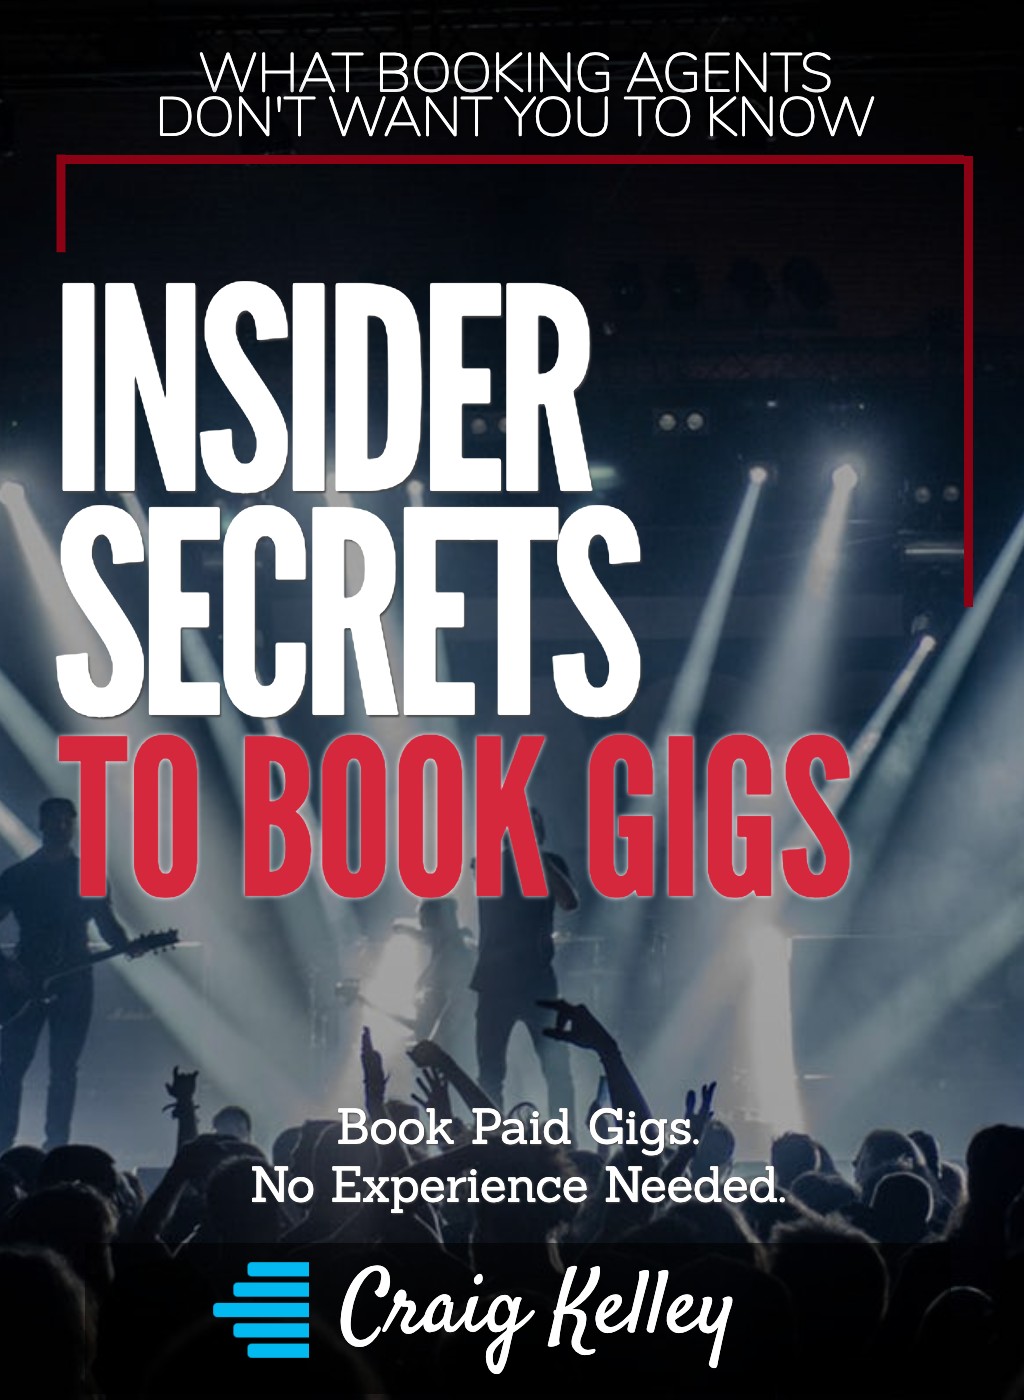 Insider Secrets To Book Gigs